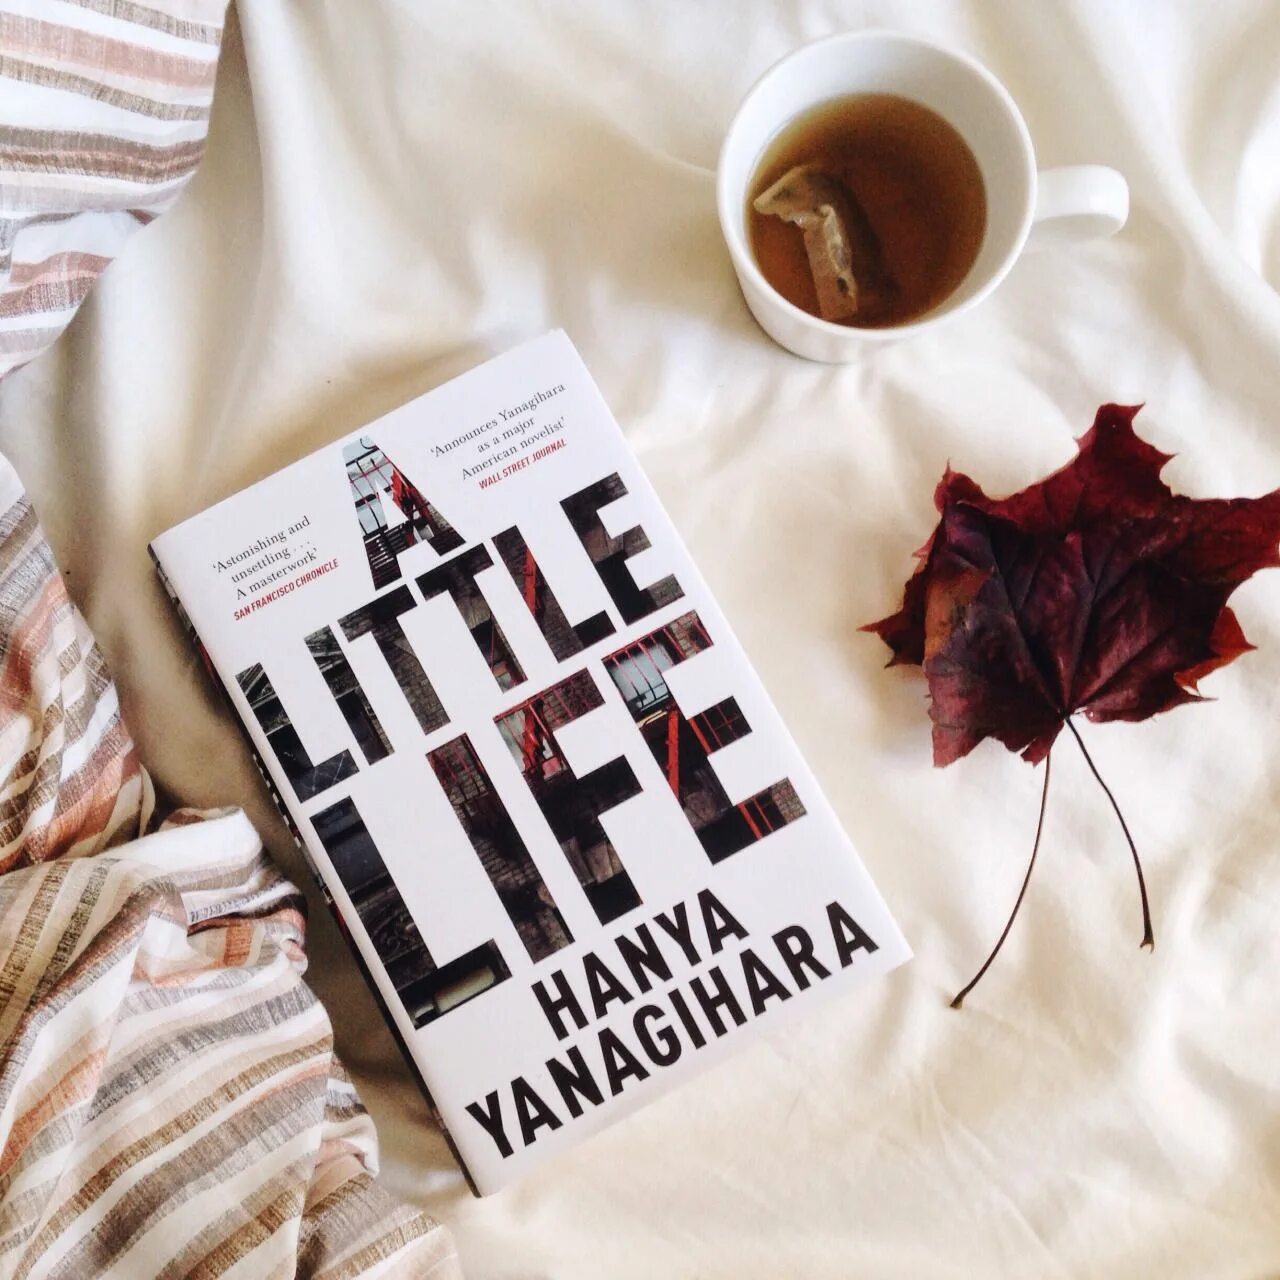 Маленькая жизнь Ханья Янагихара. A little Life книга. Обложка книги a little Life. Маленькая жизнь книга обложка.